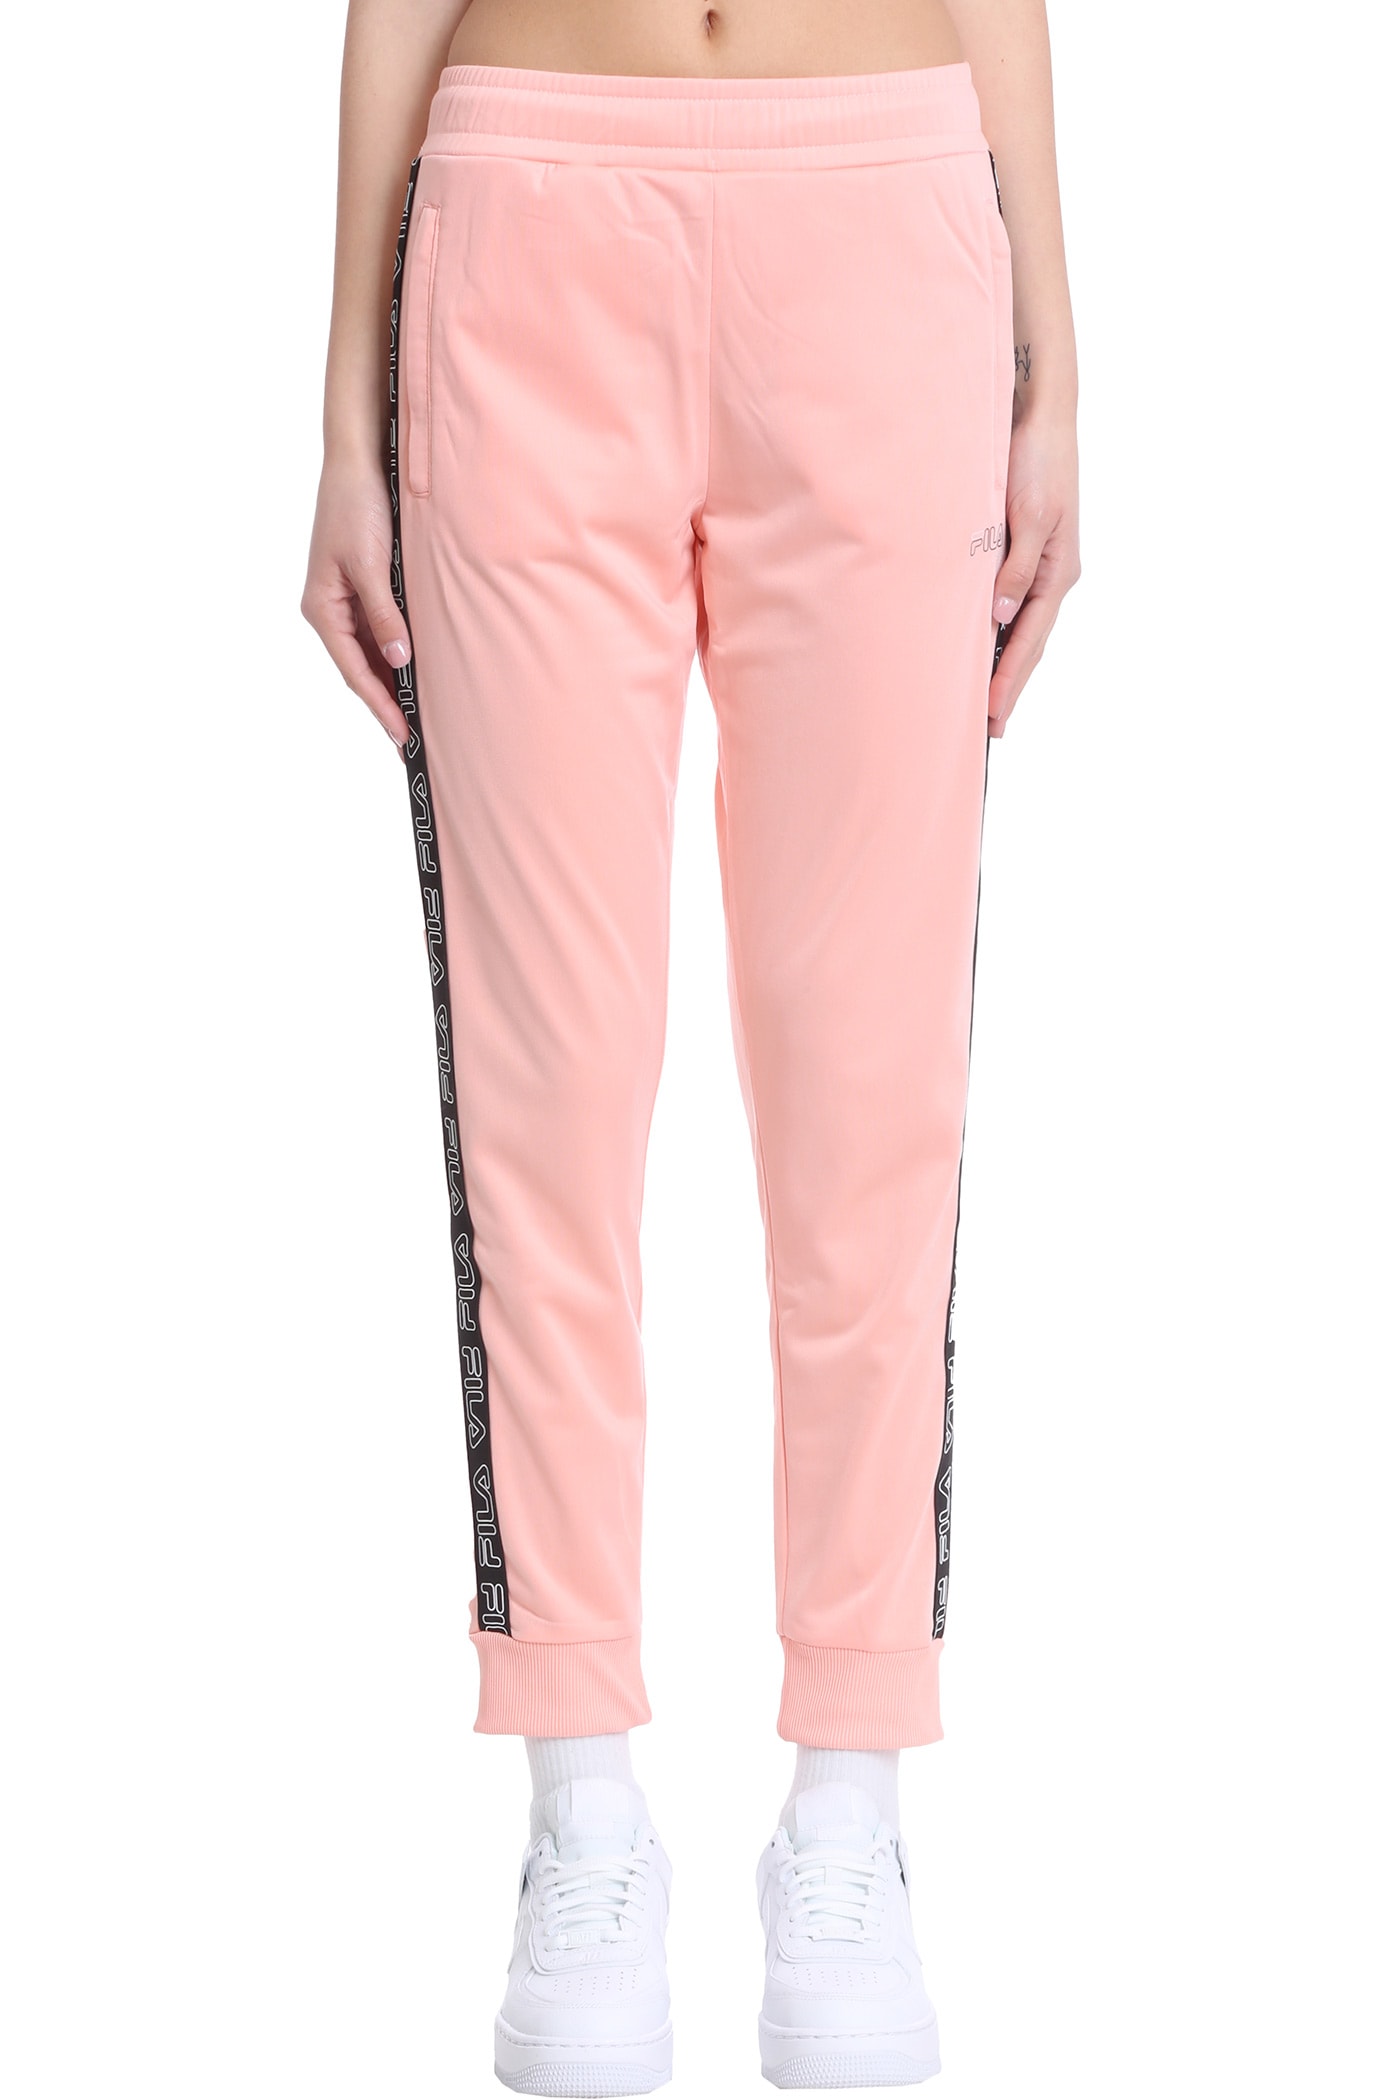 Fila Jacoba Pants In Rose-pink Synthetic Fibers